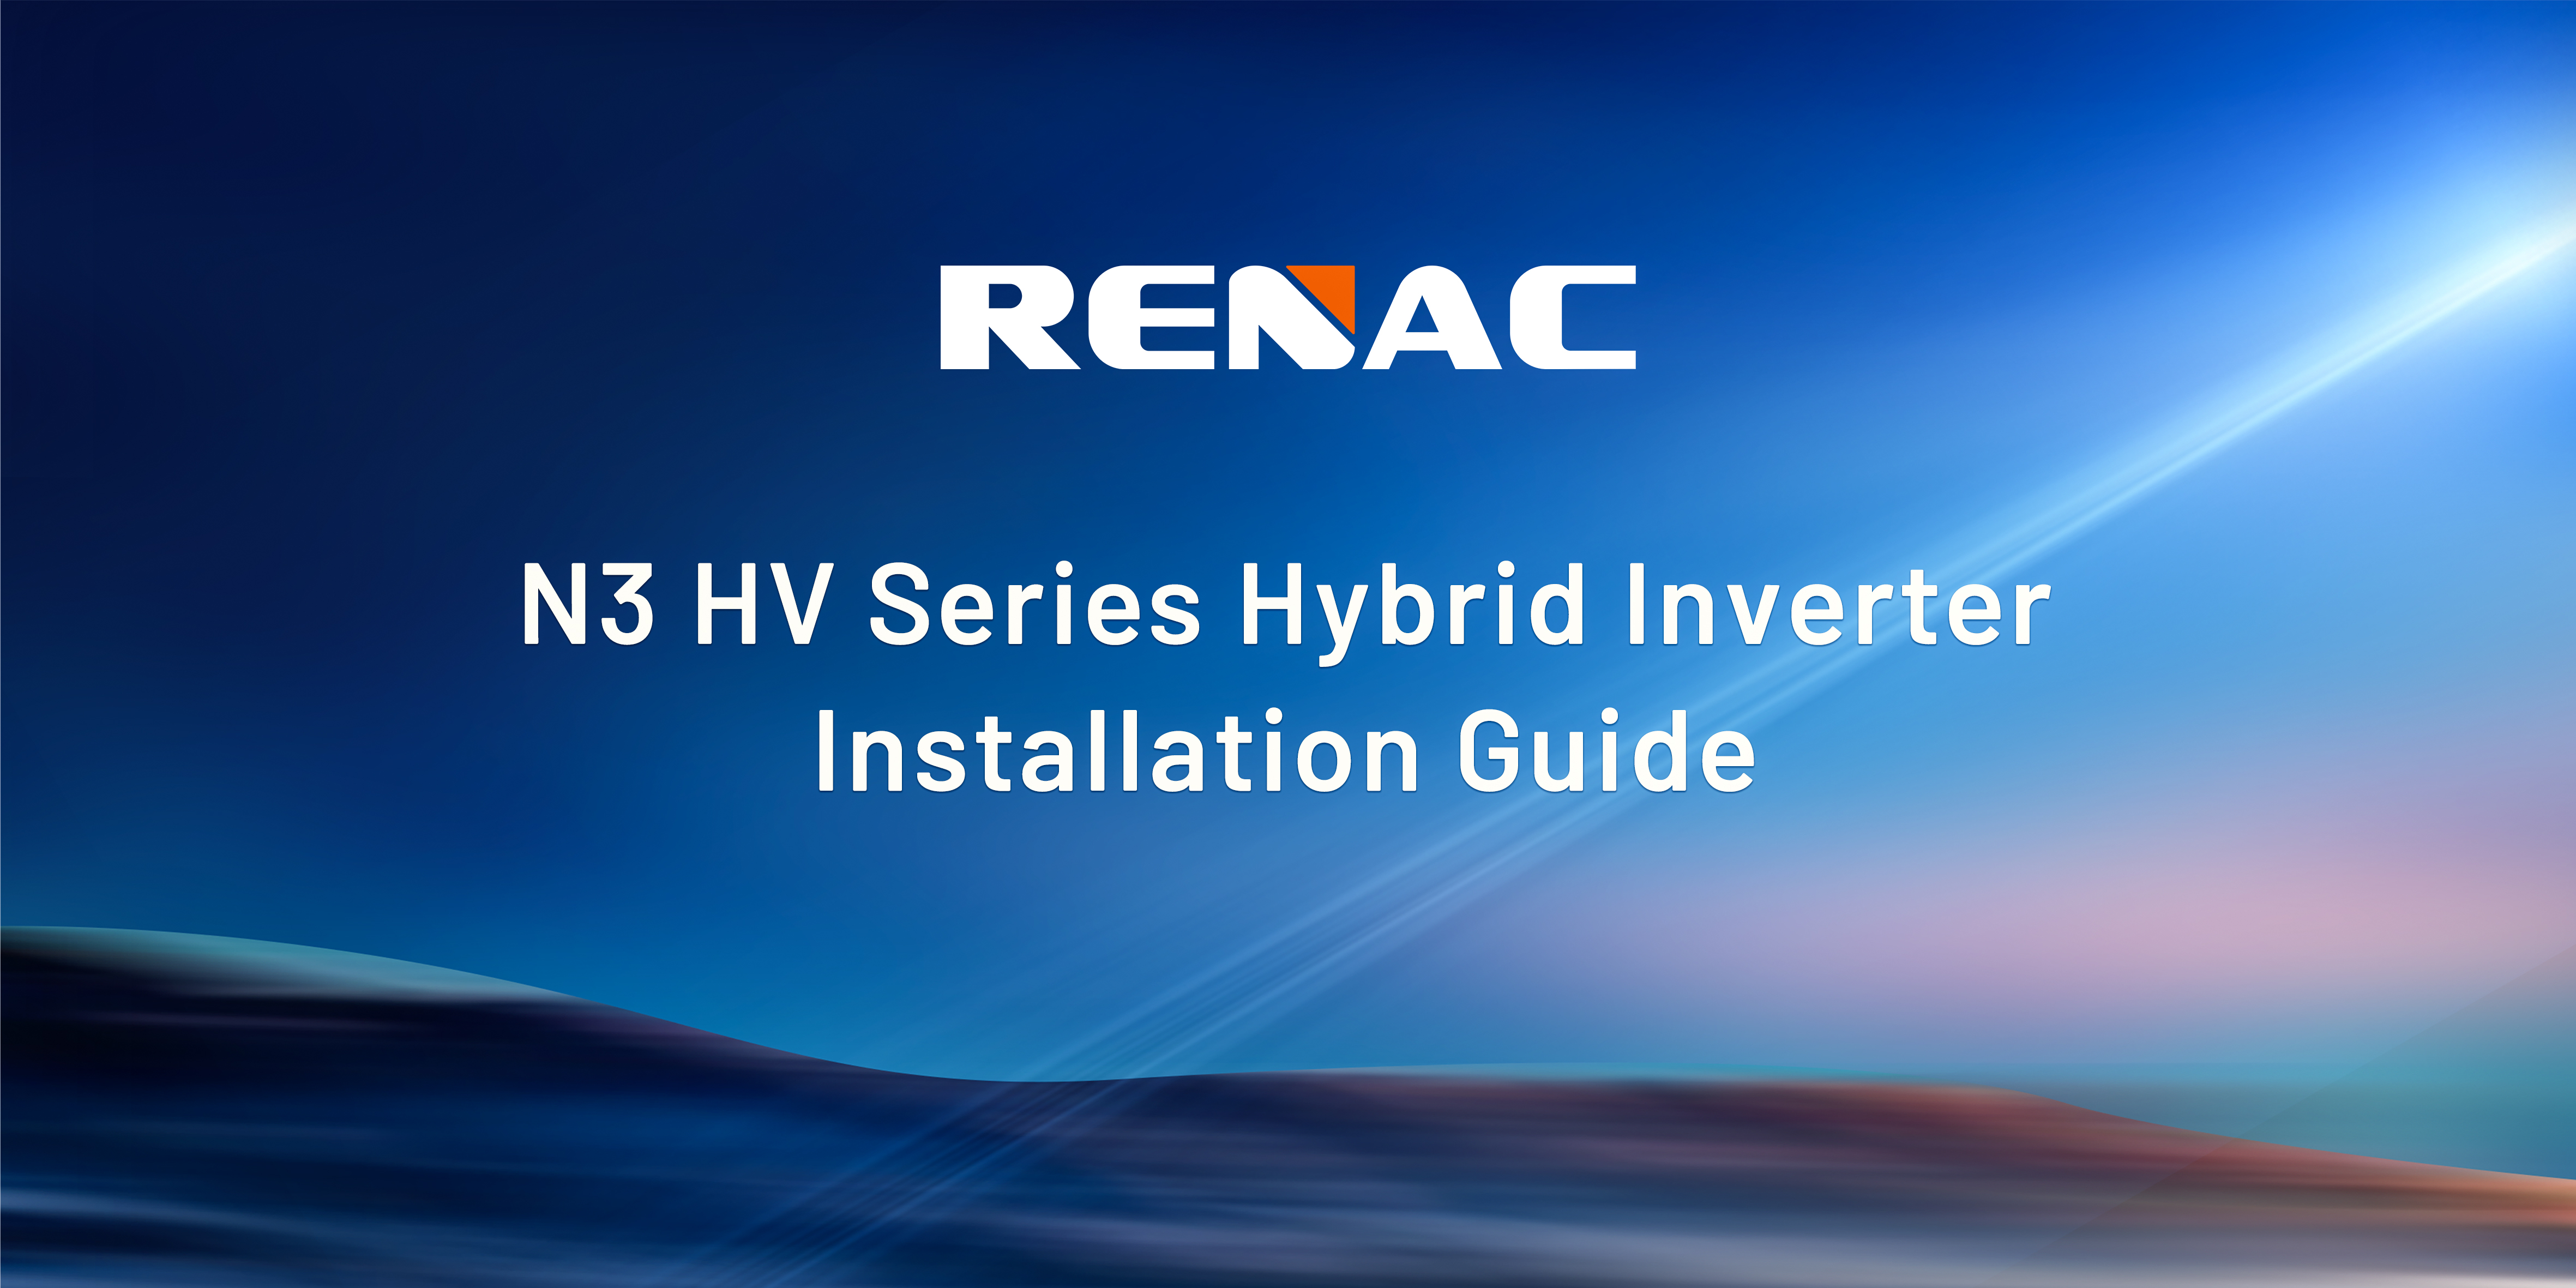 RENAC N3 HV Series Hybrid Inverter Installation Guide